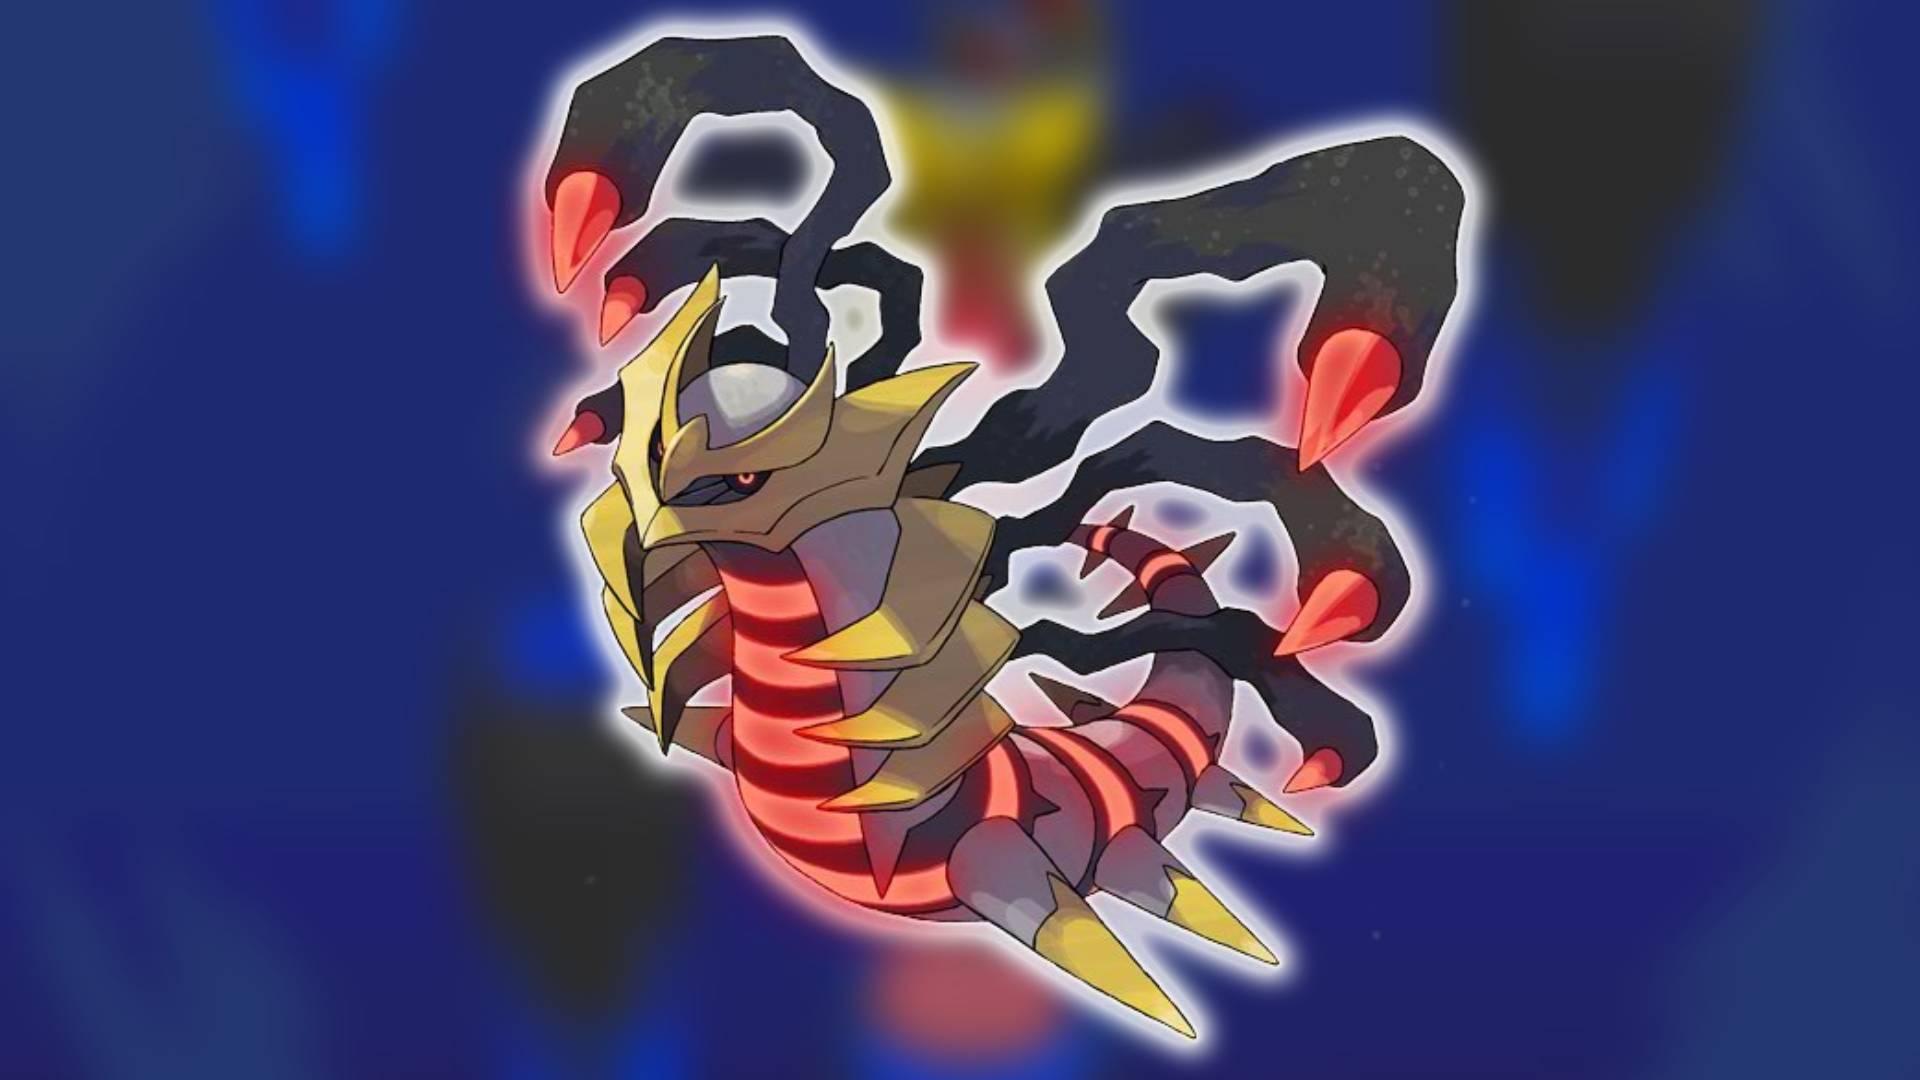 Giratina - Origin (Pokémon GO) - Best Movesets, Counters